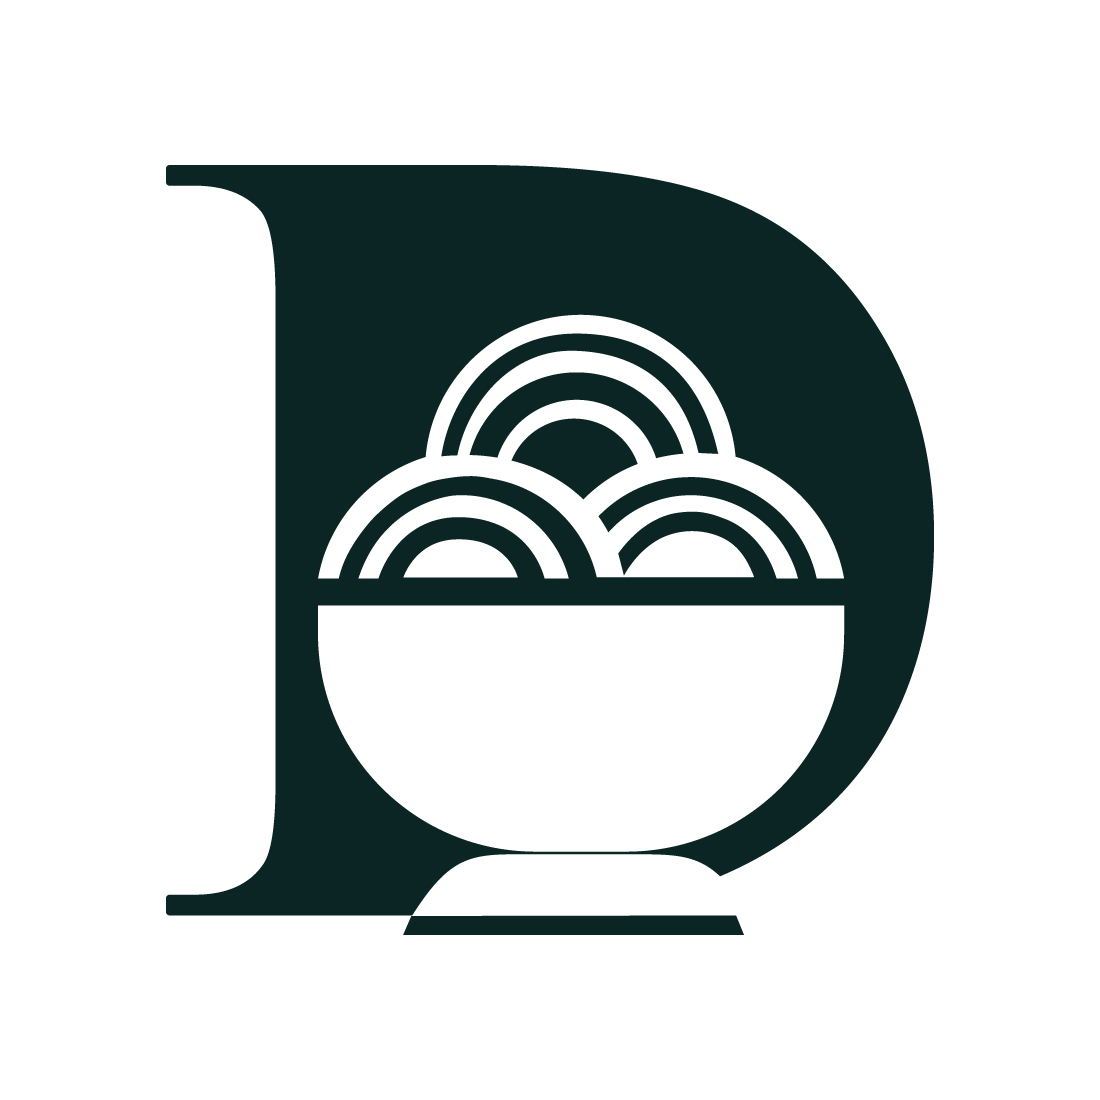 Professional D letters logo design vector images D noodles logo design D logo best icon template illustration preview image.